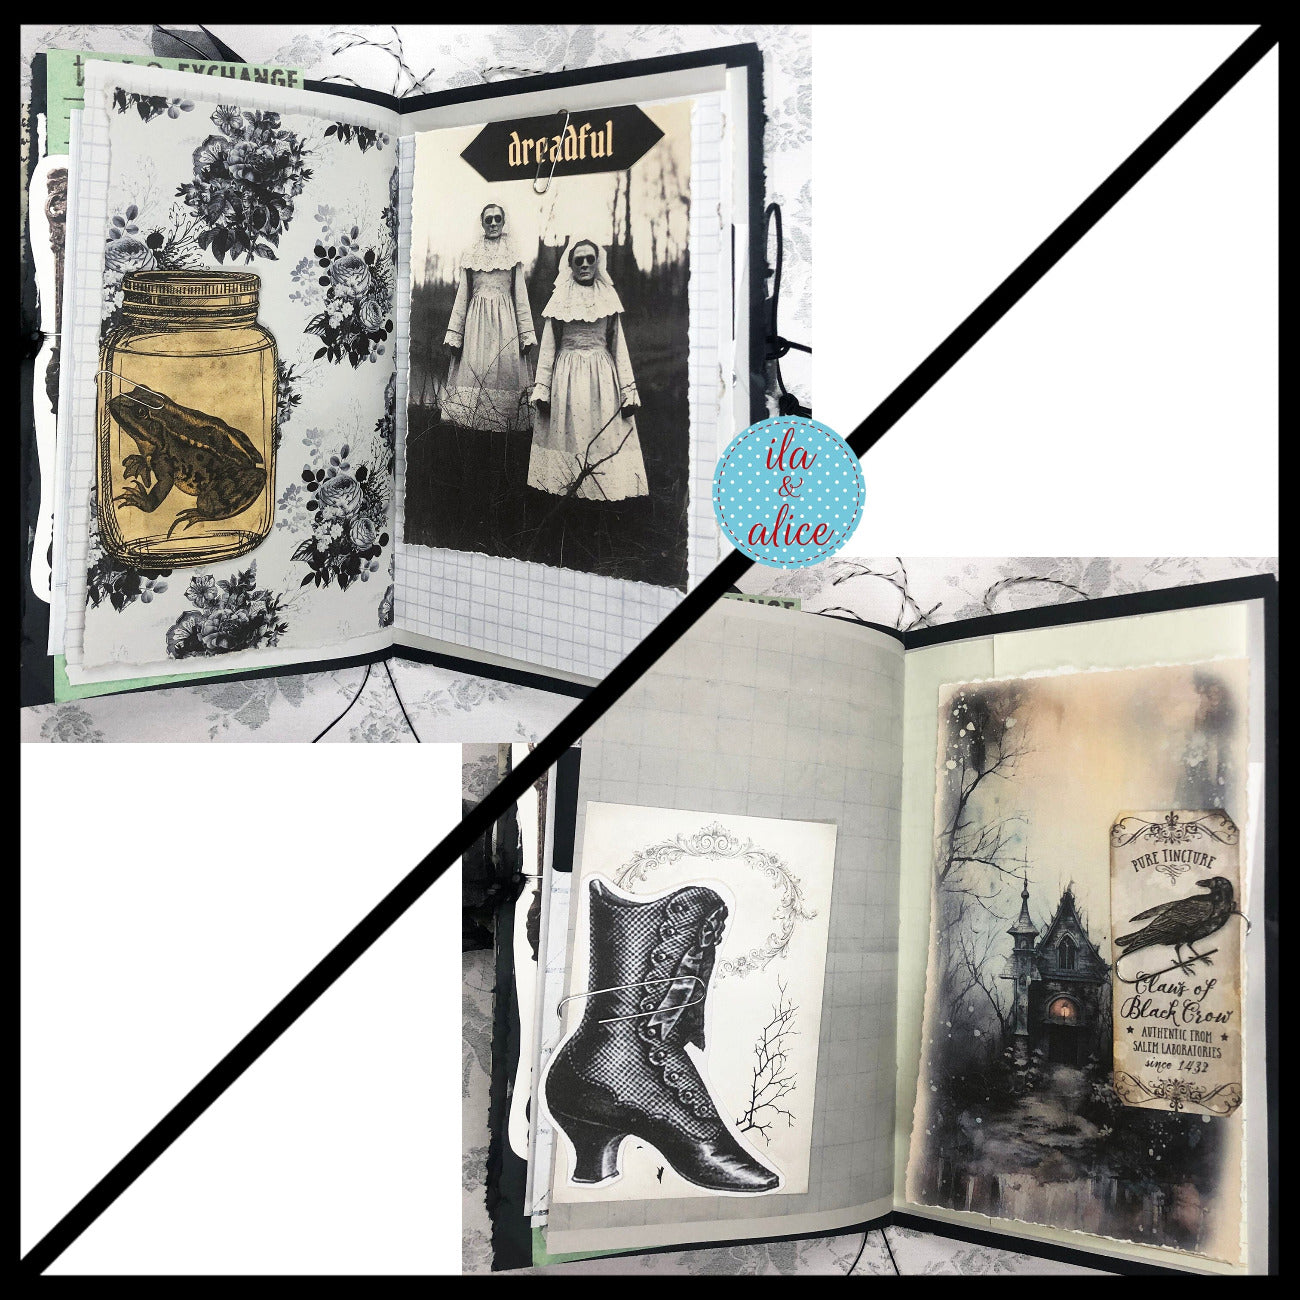 Creepy Graveyard Winter Junk Journal w Spooky Collage Cover Journal ila & alice 